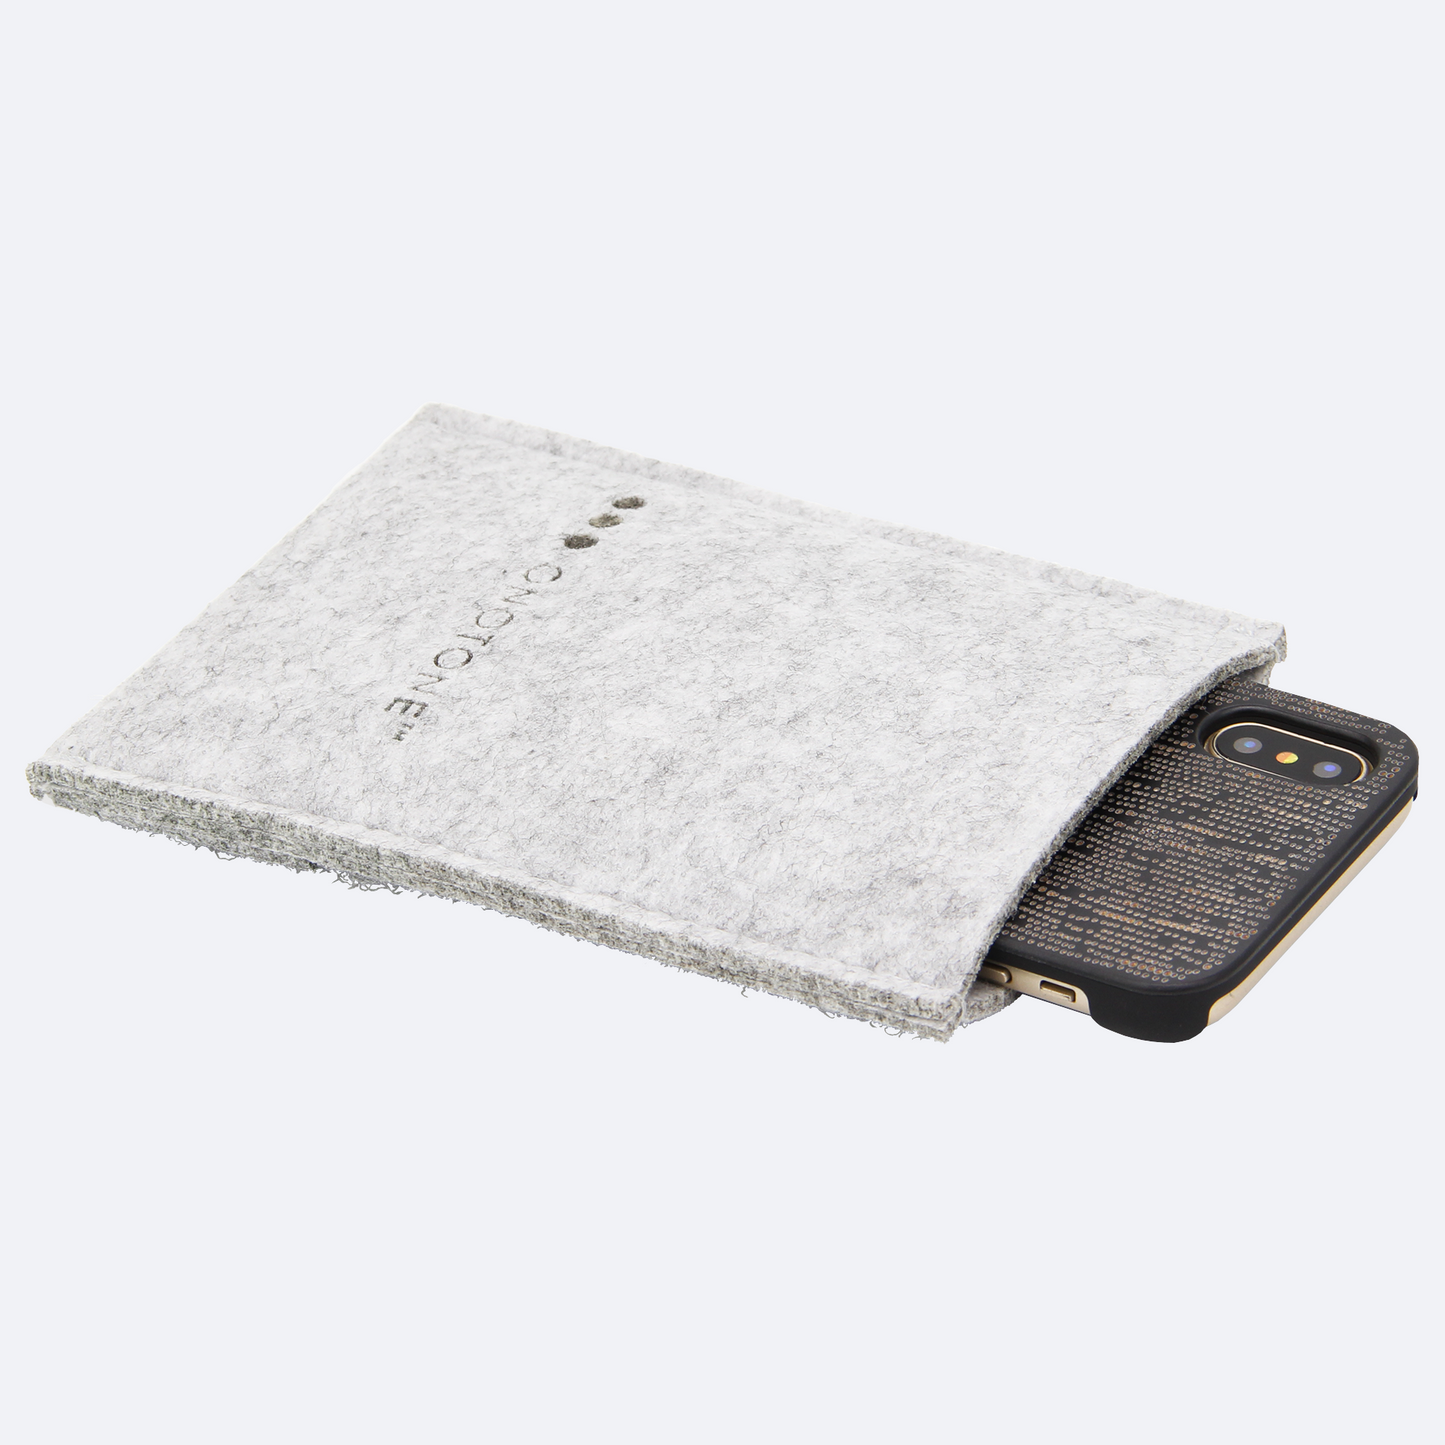 Black iPhone case pouch